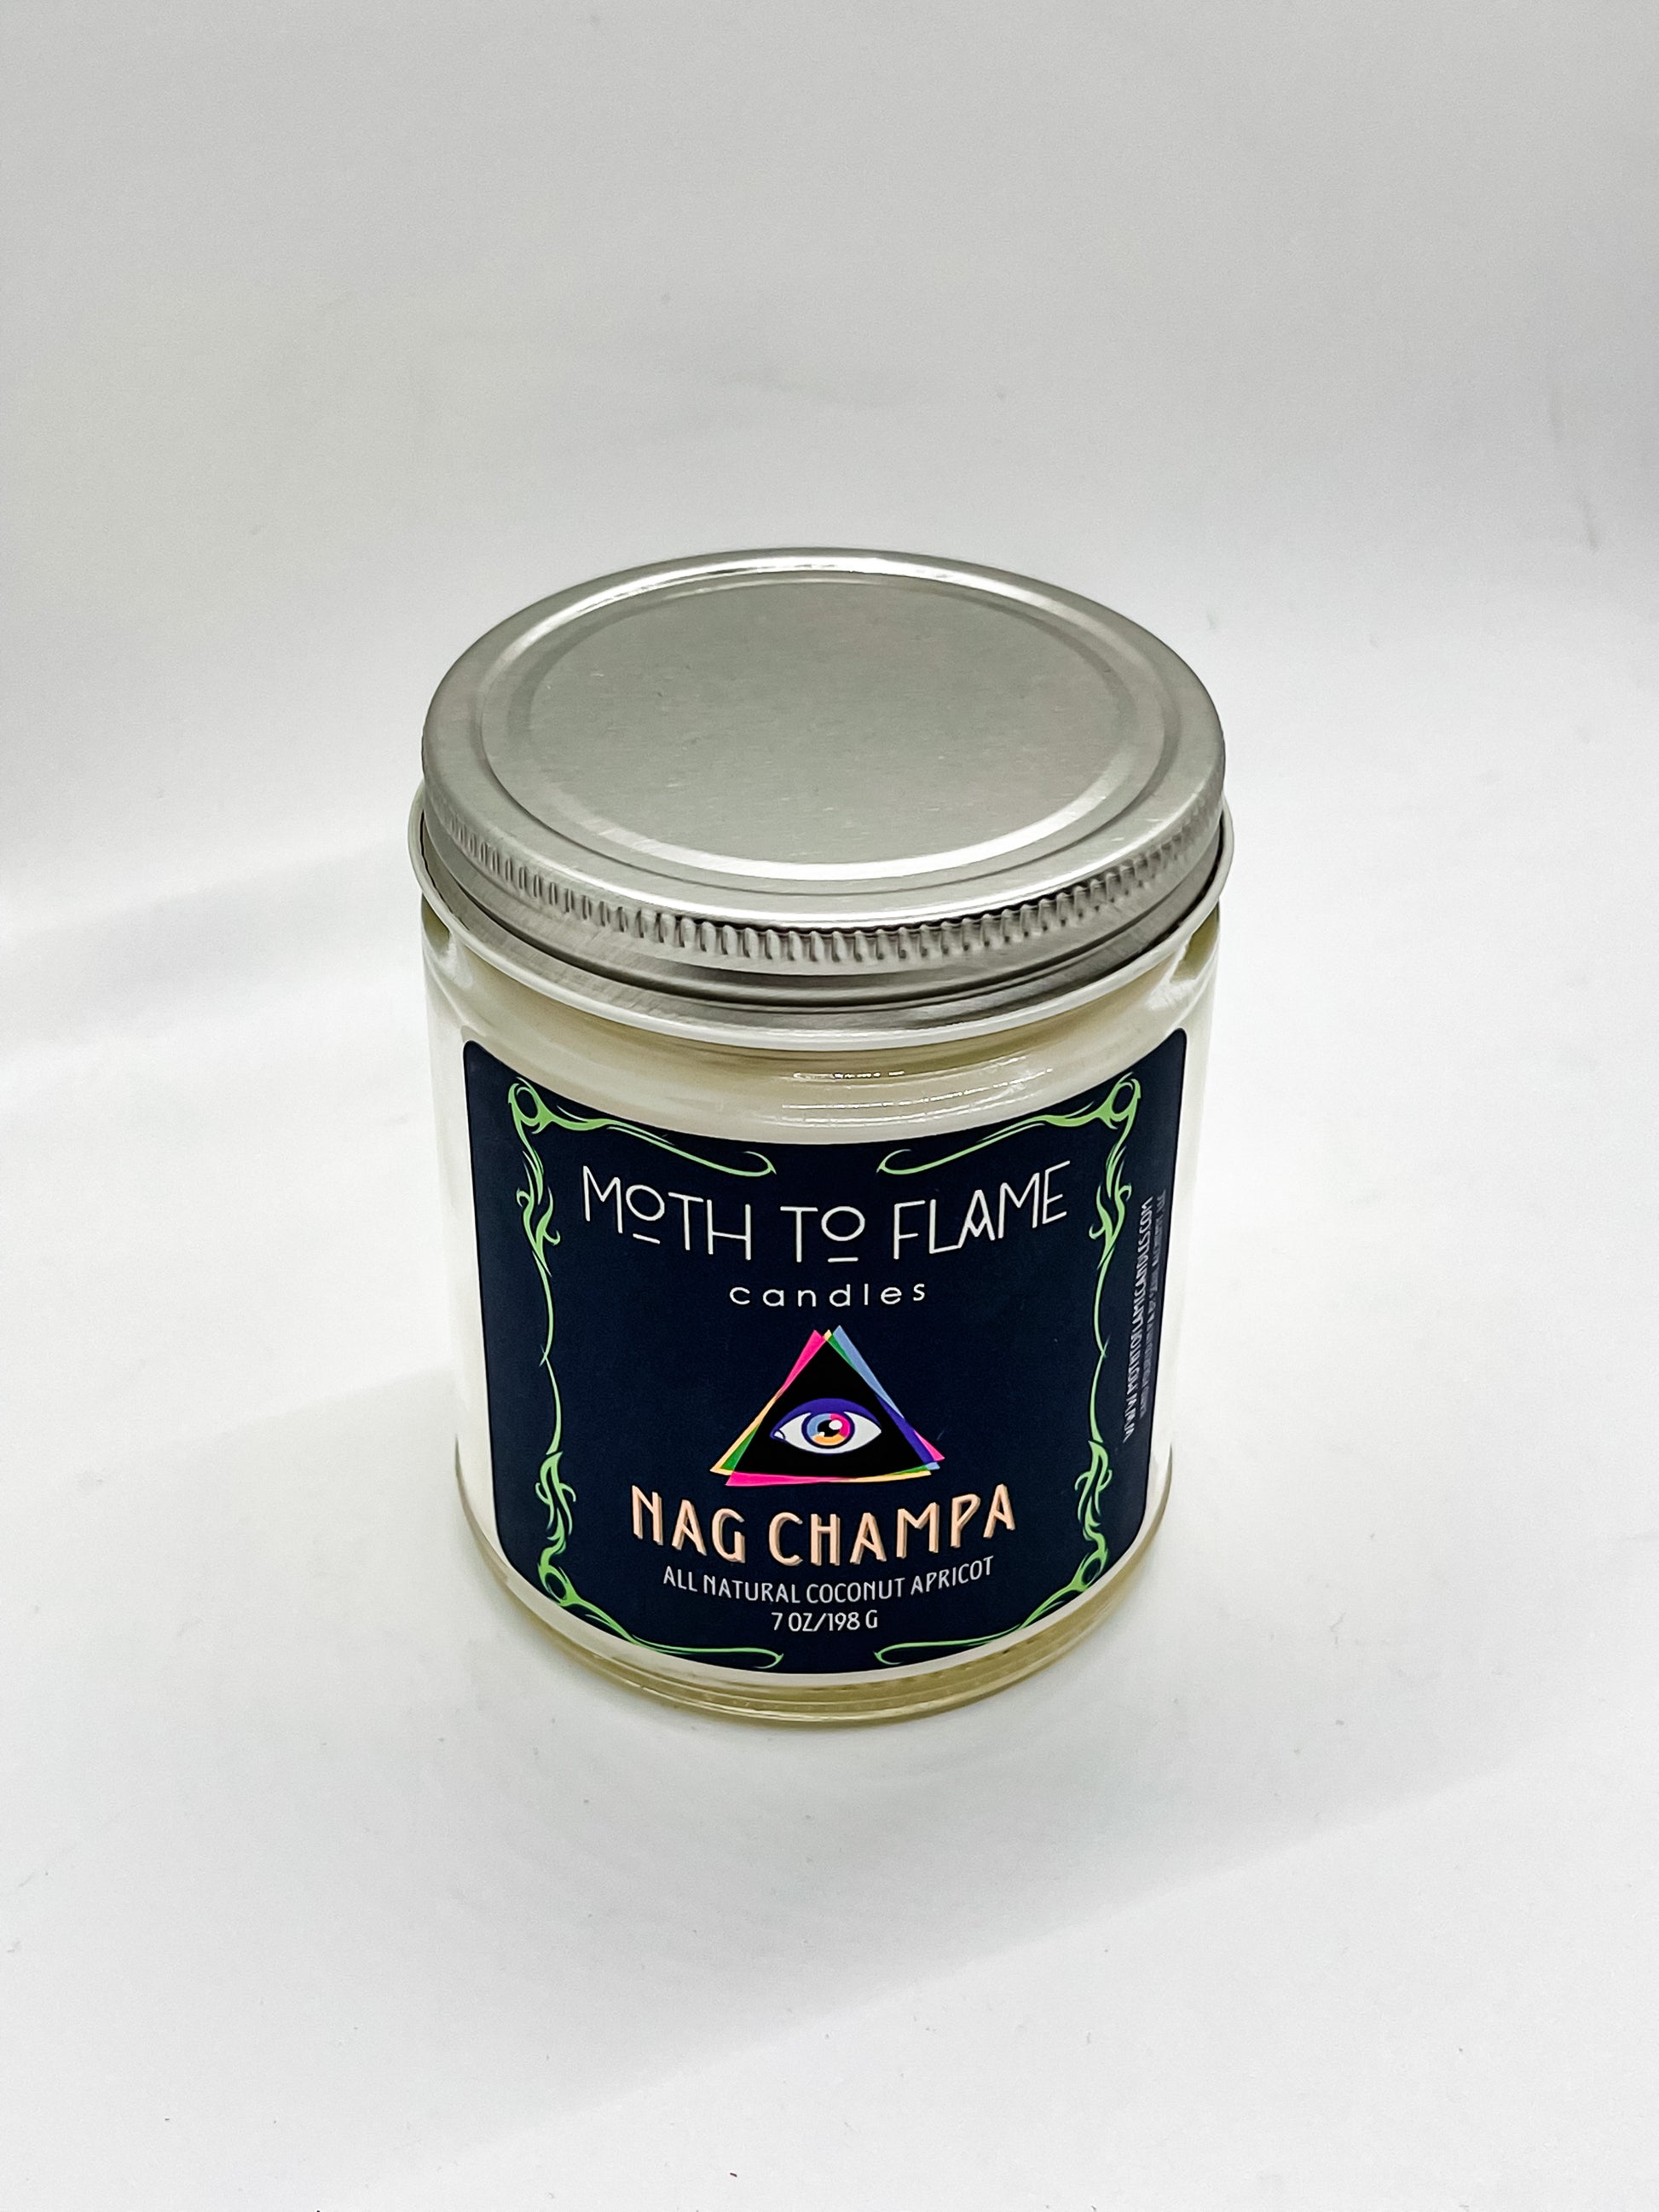 Nag Champa – Moth to Flame Candles